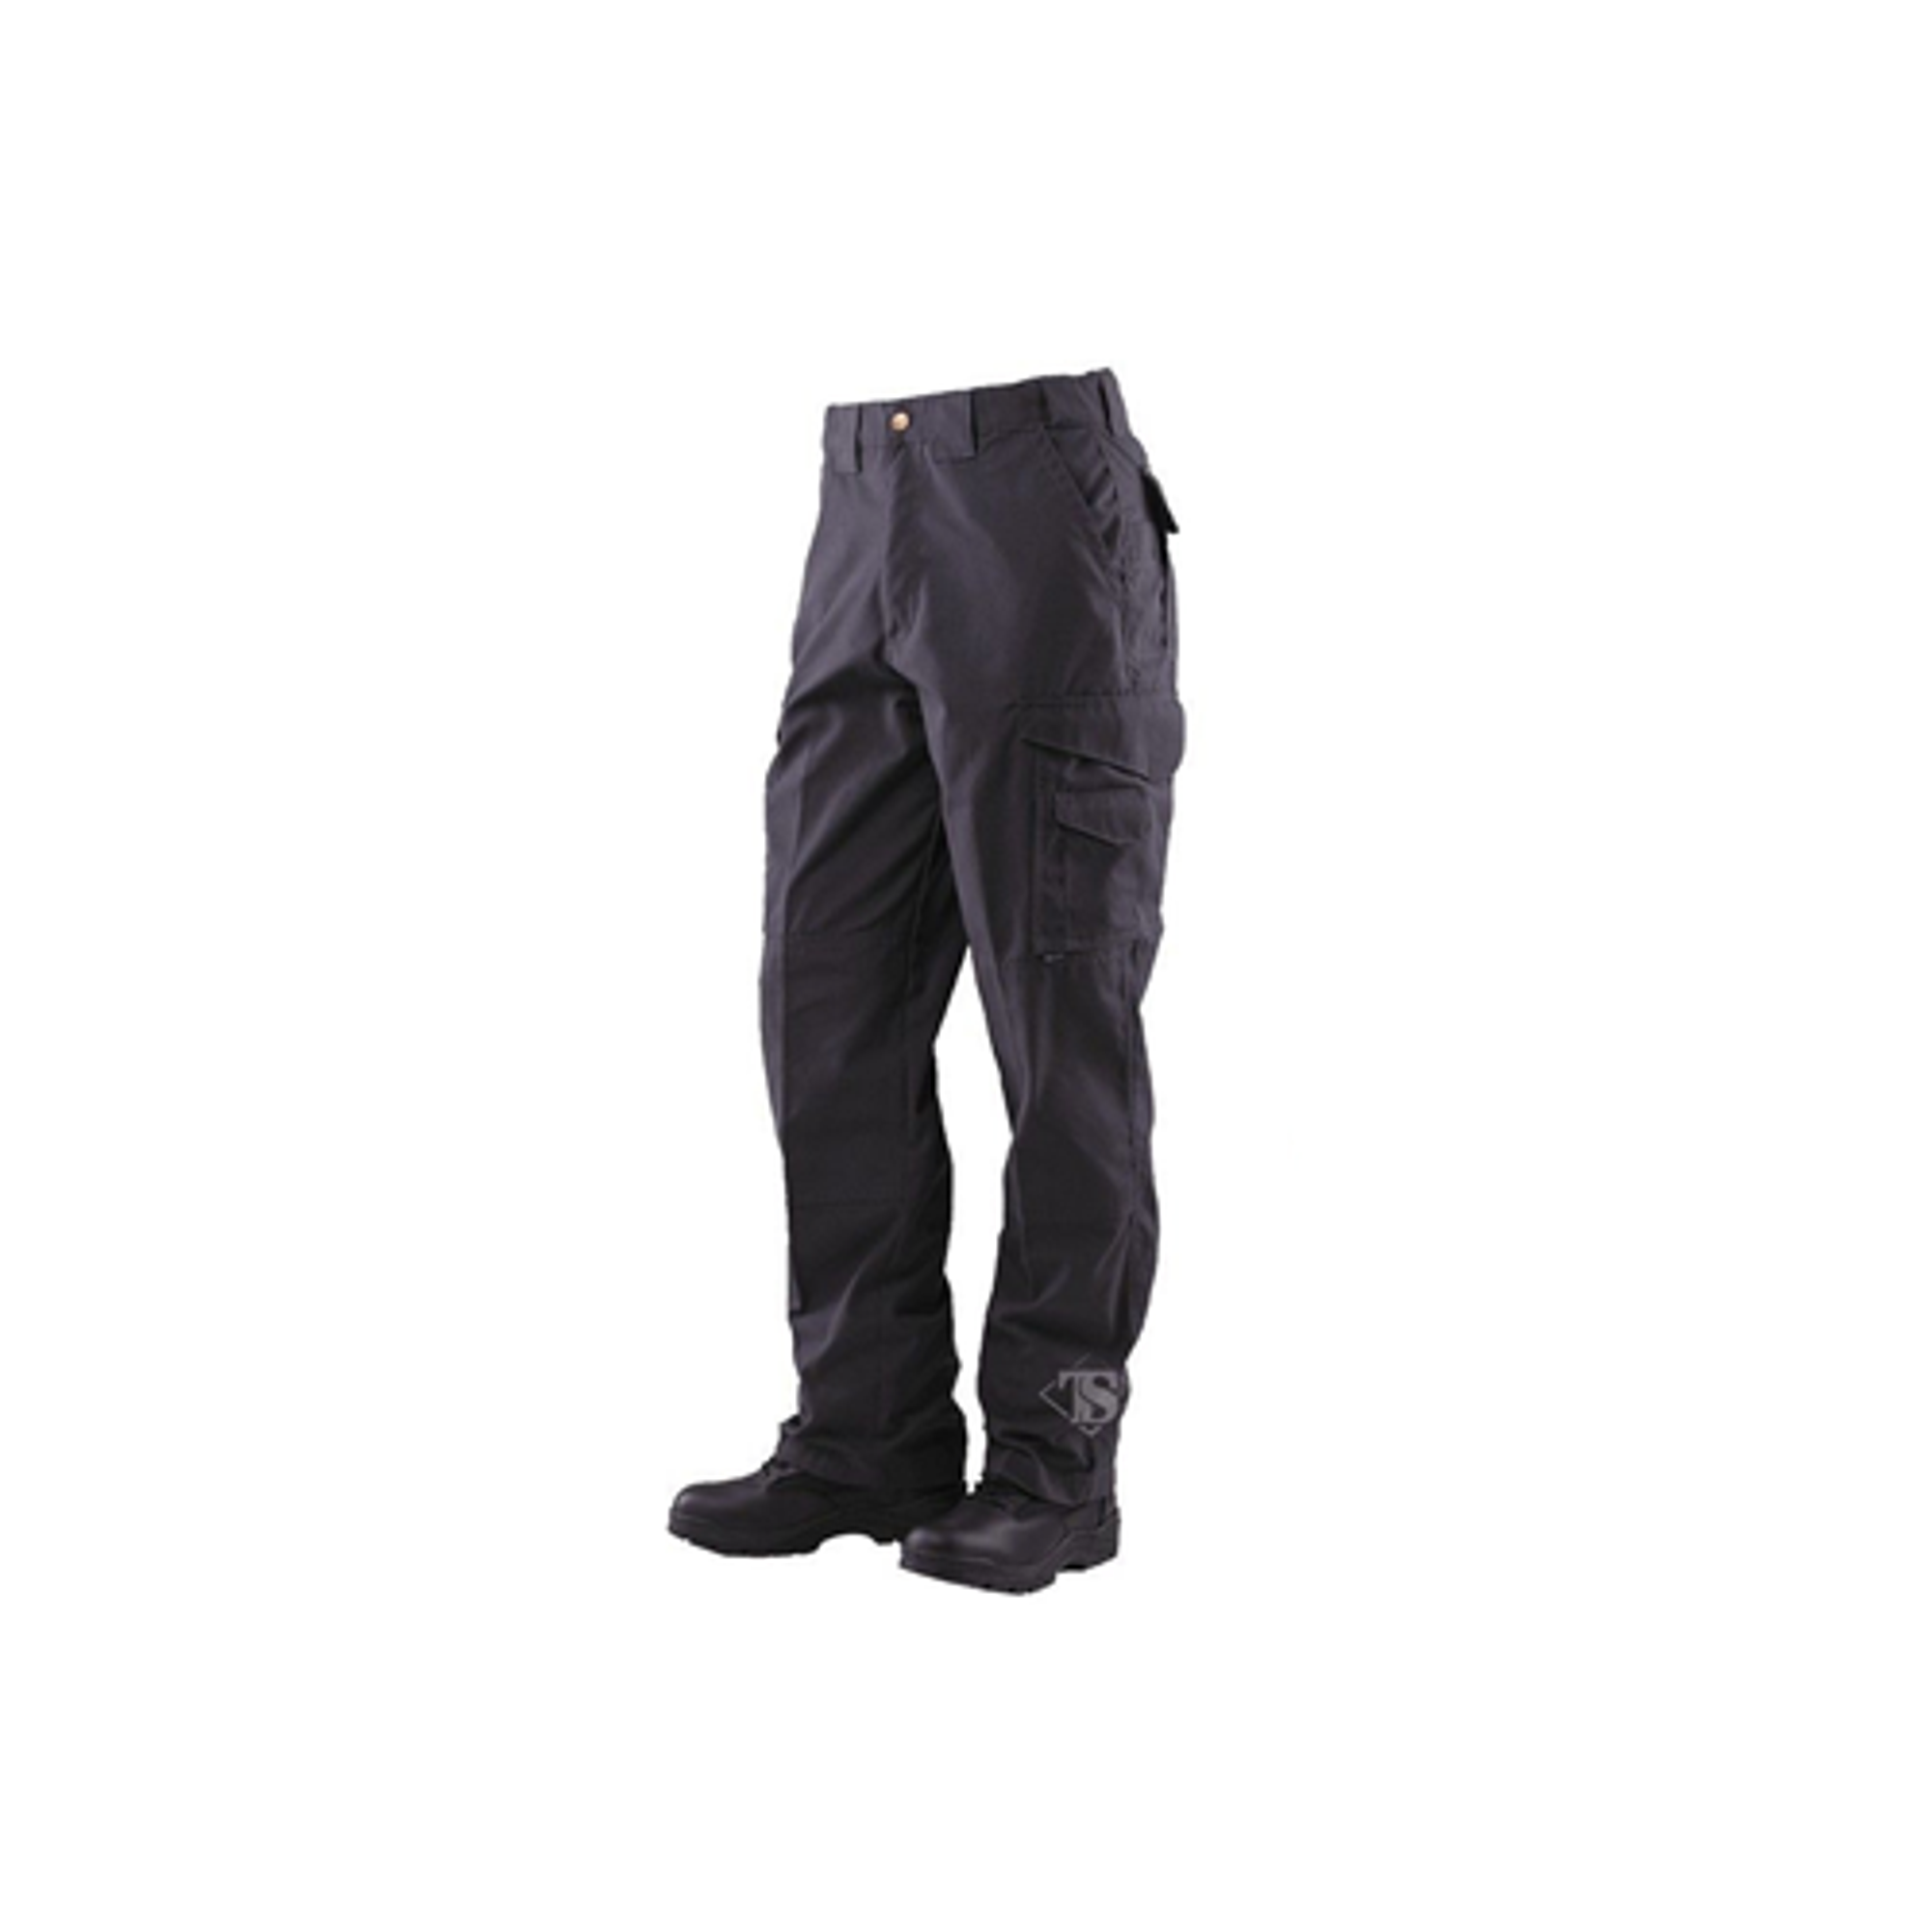 24-7 Original Tactical Pants - 6.5oz - Black - KRTSP-1062044